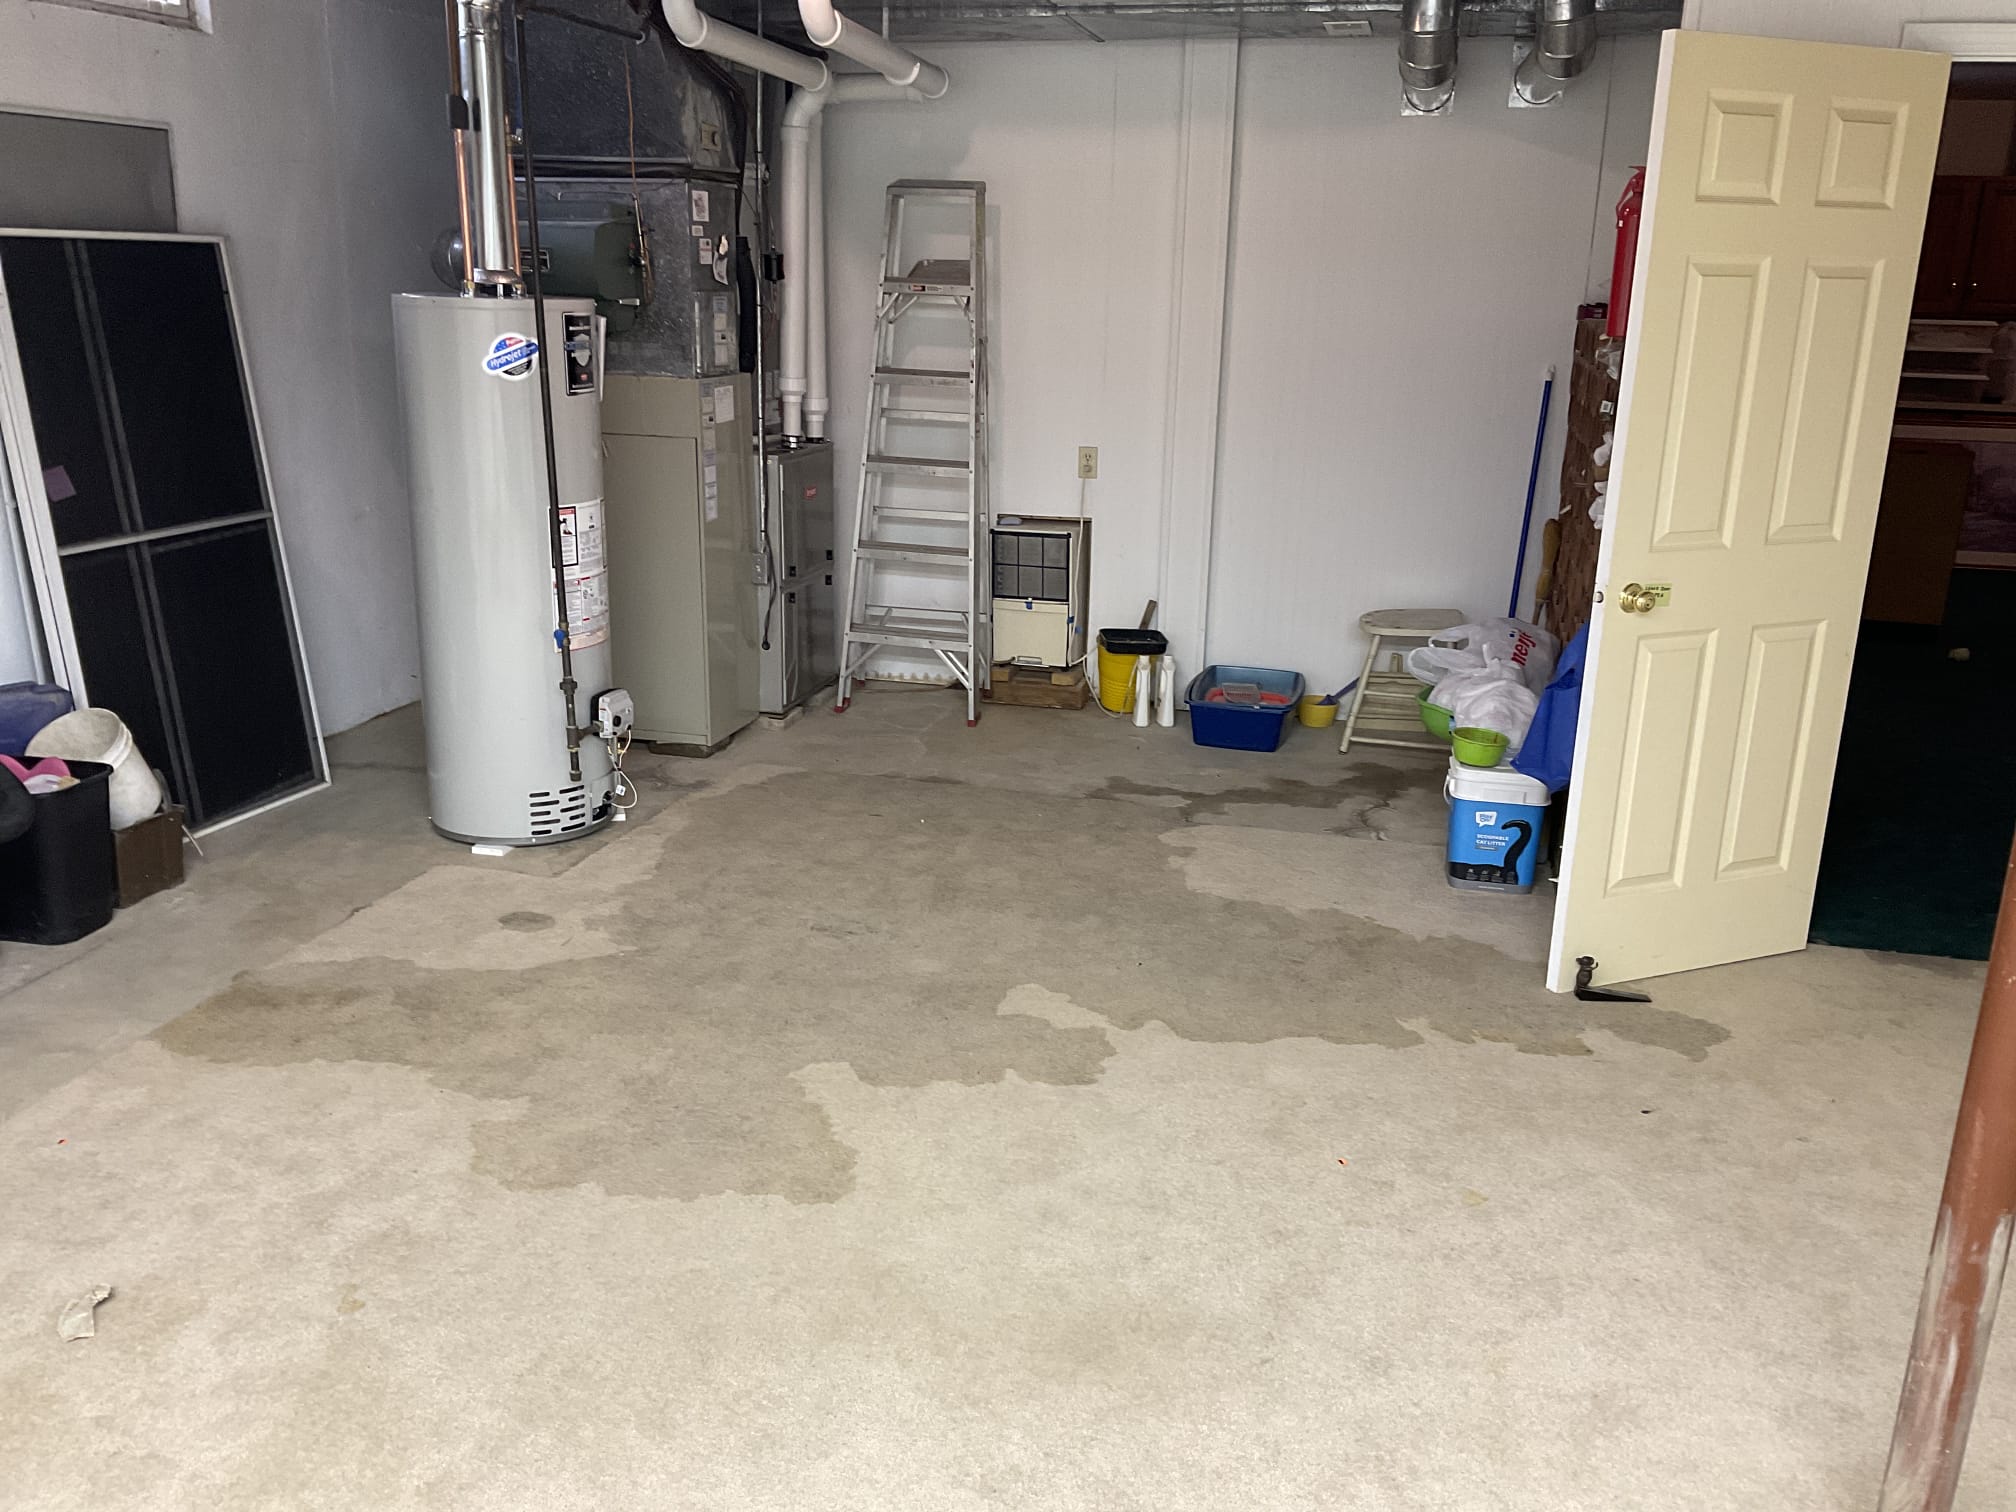 Wet carpet due to water heater leak